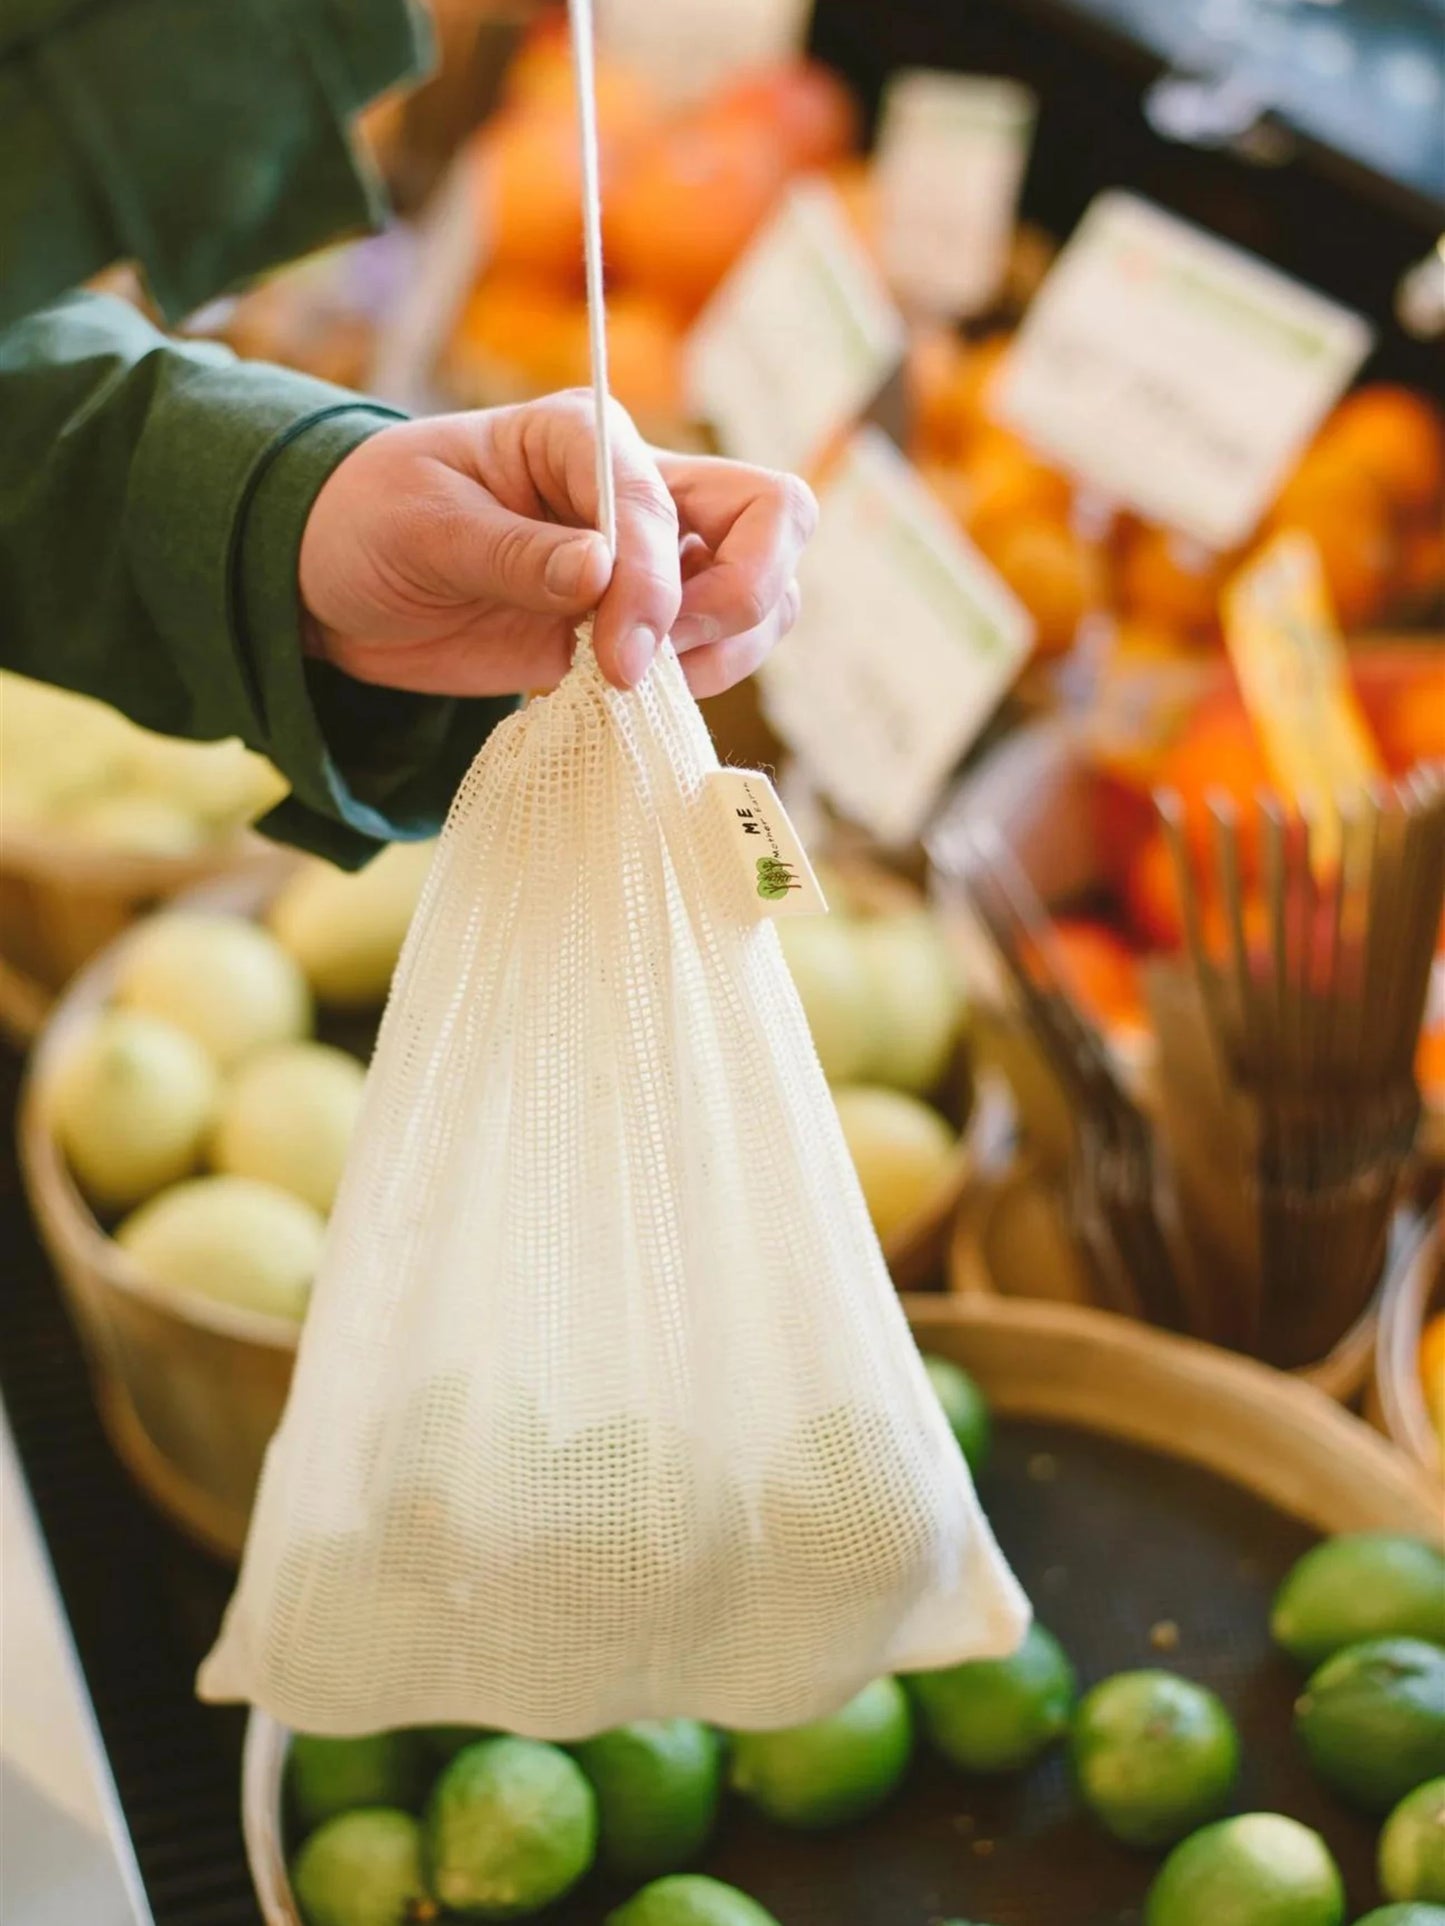 Reusable Cotton Mesh Produce Bags